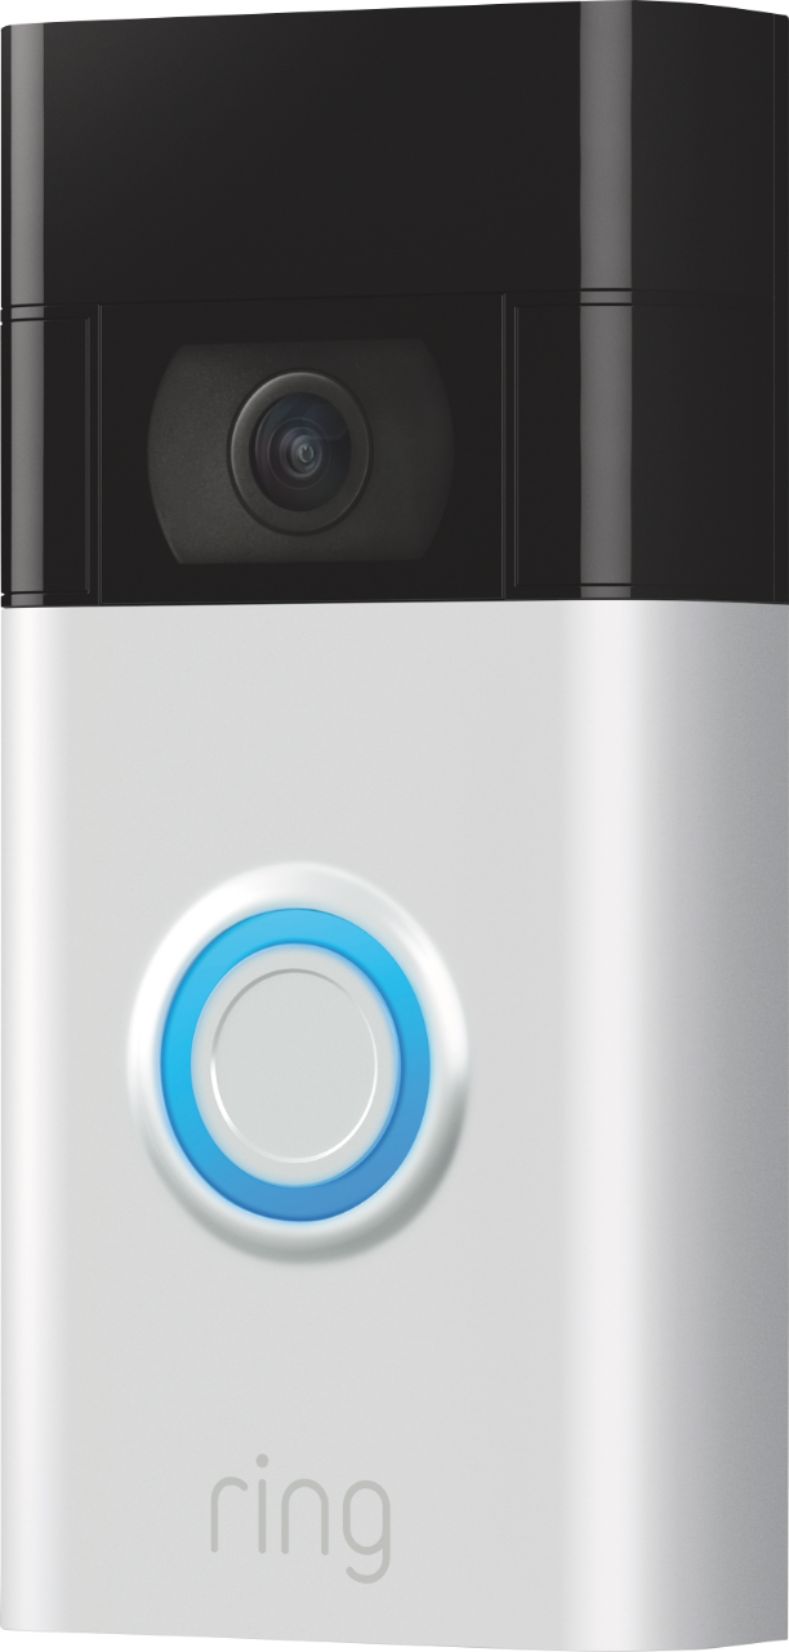 Shop  Echo Dot (3rd Gen) - Charcoal + Ring Video Doorbell